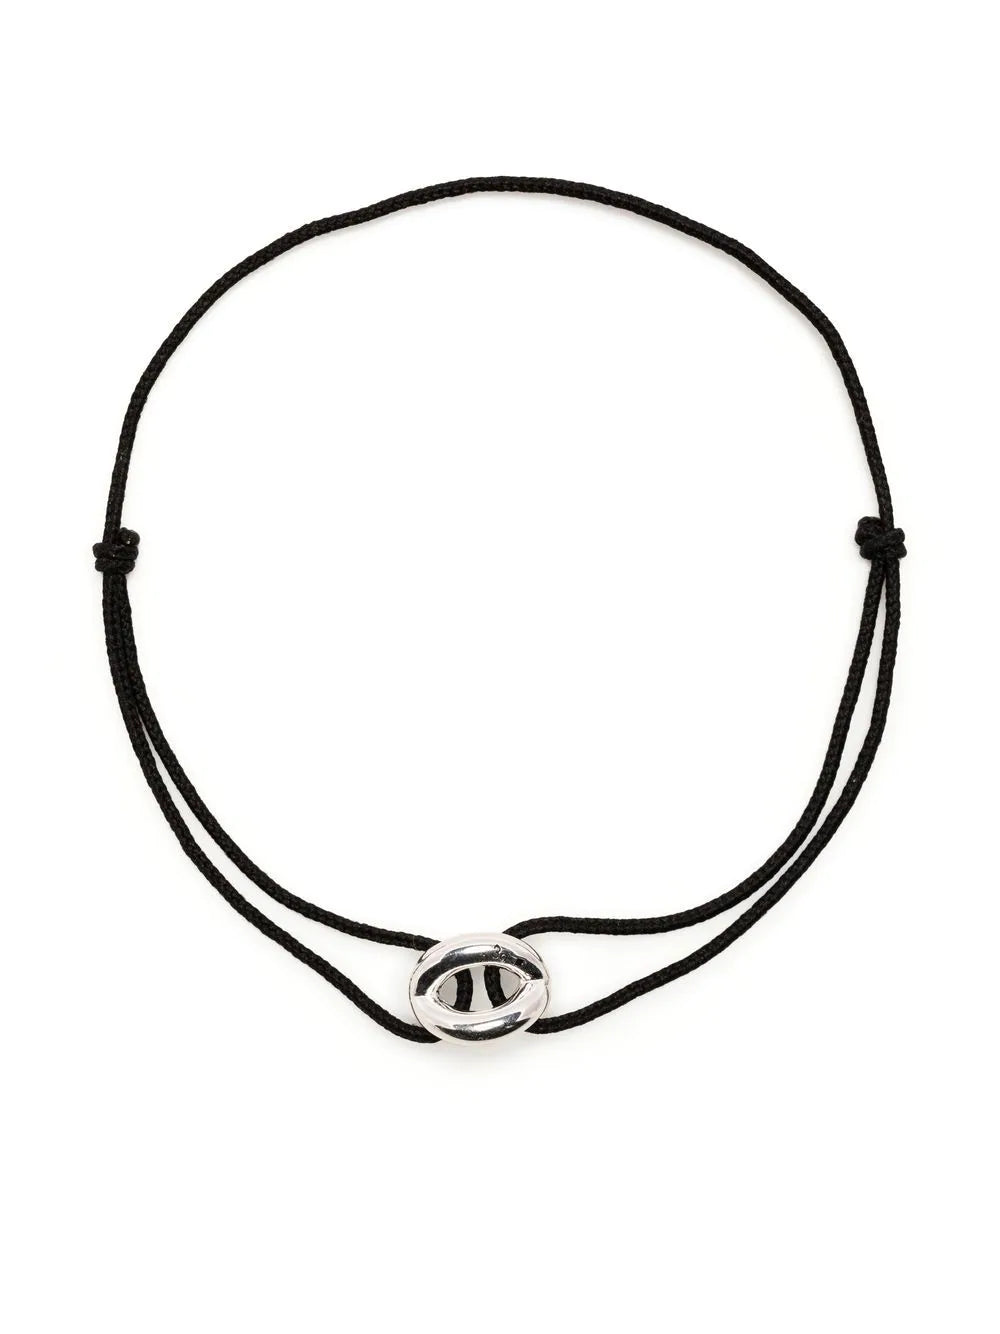 Sterling Silver Black Trinity Bracelet - Size Os/ Adjustable